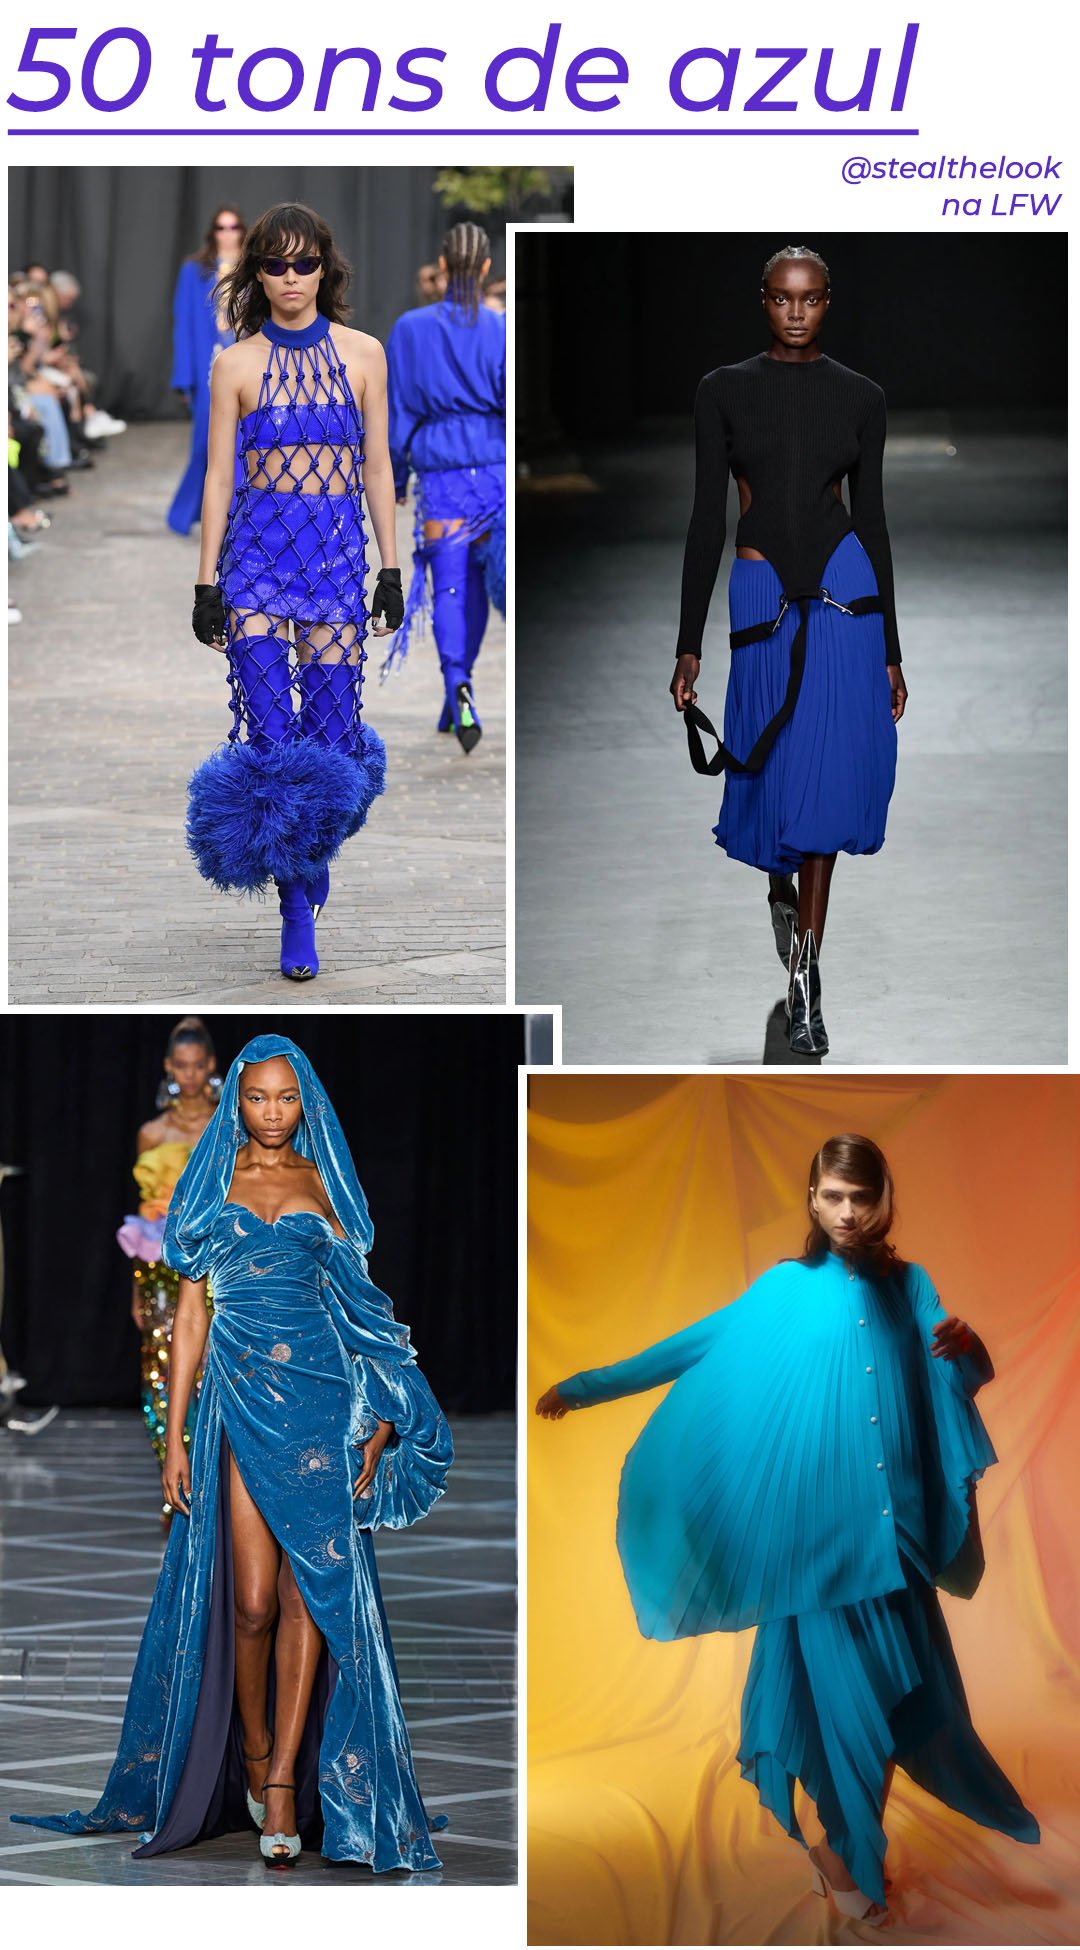 David Koma, Christopher Kane, Halpern e Edeline Lee - roupas azuis diversas - London Fashion Week - Primavera - modelo andando pela passarela - https://stealthelook.com.br